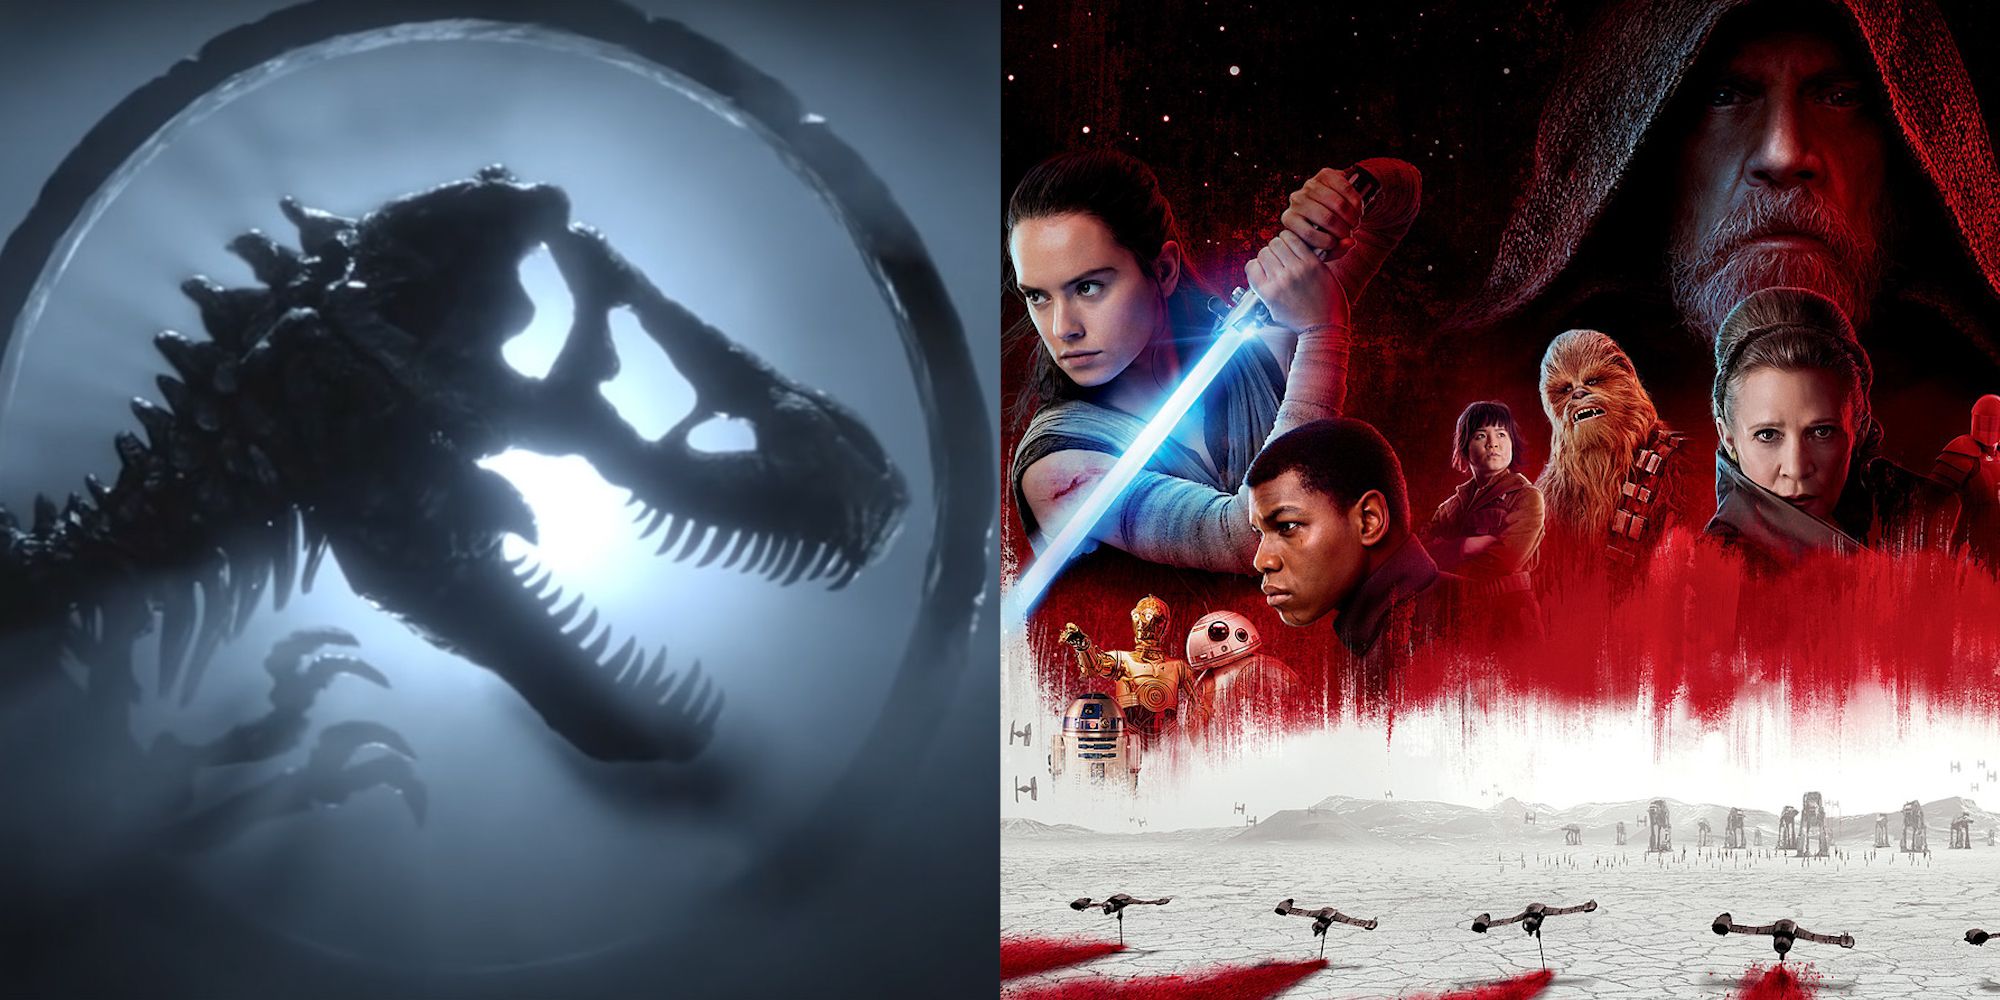 Sci Fi Collage